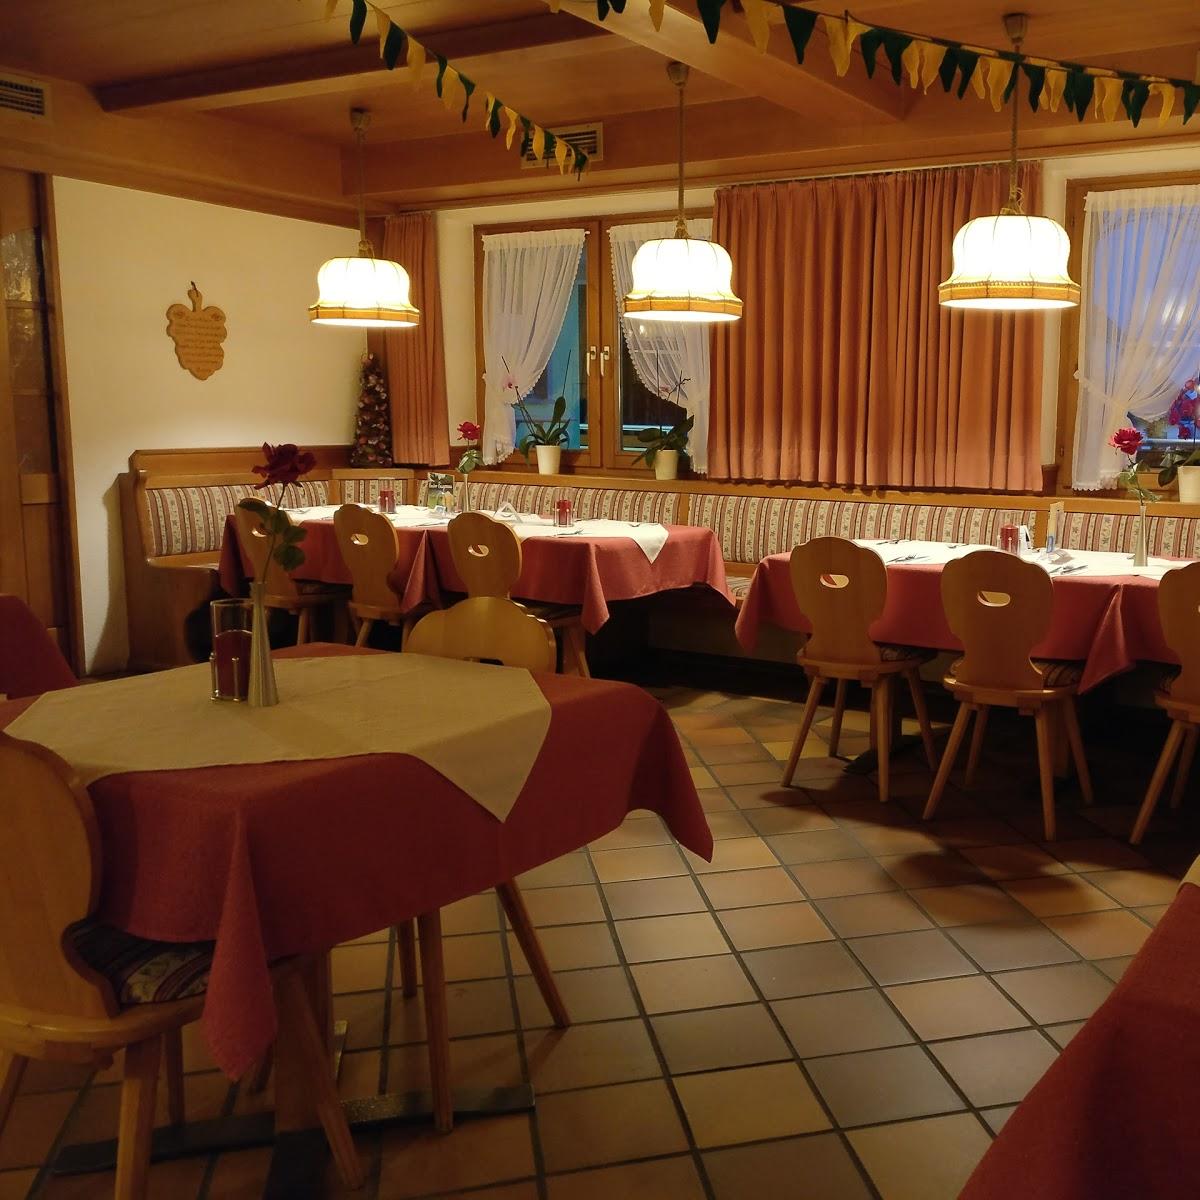 Restaurant "Gasthof Pension Lamm" in Görwihl